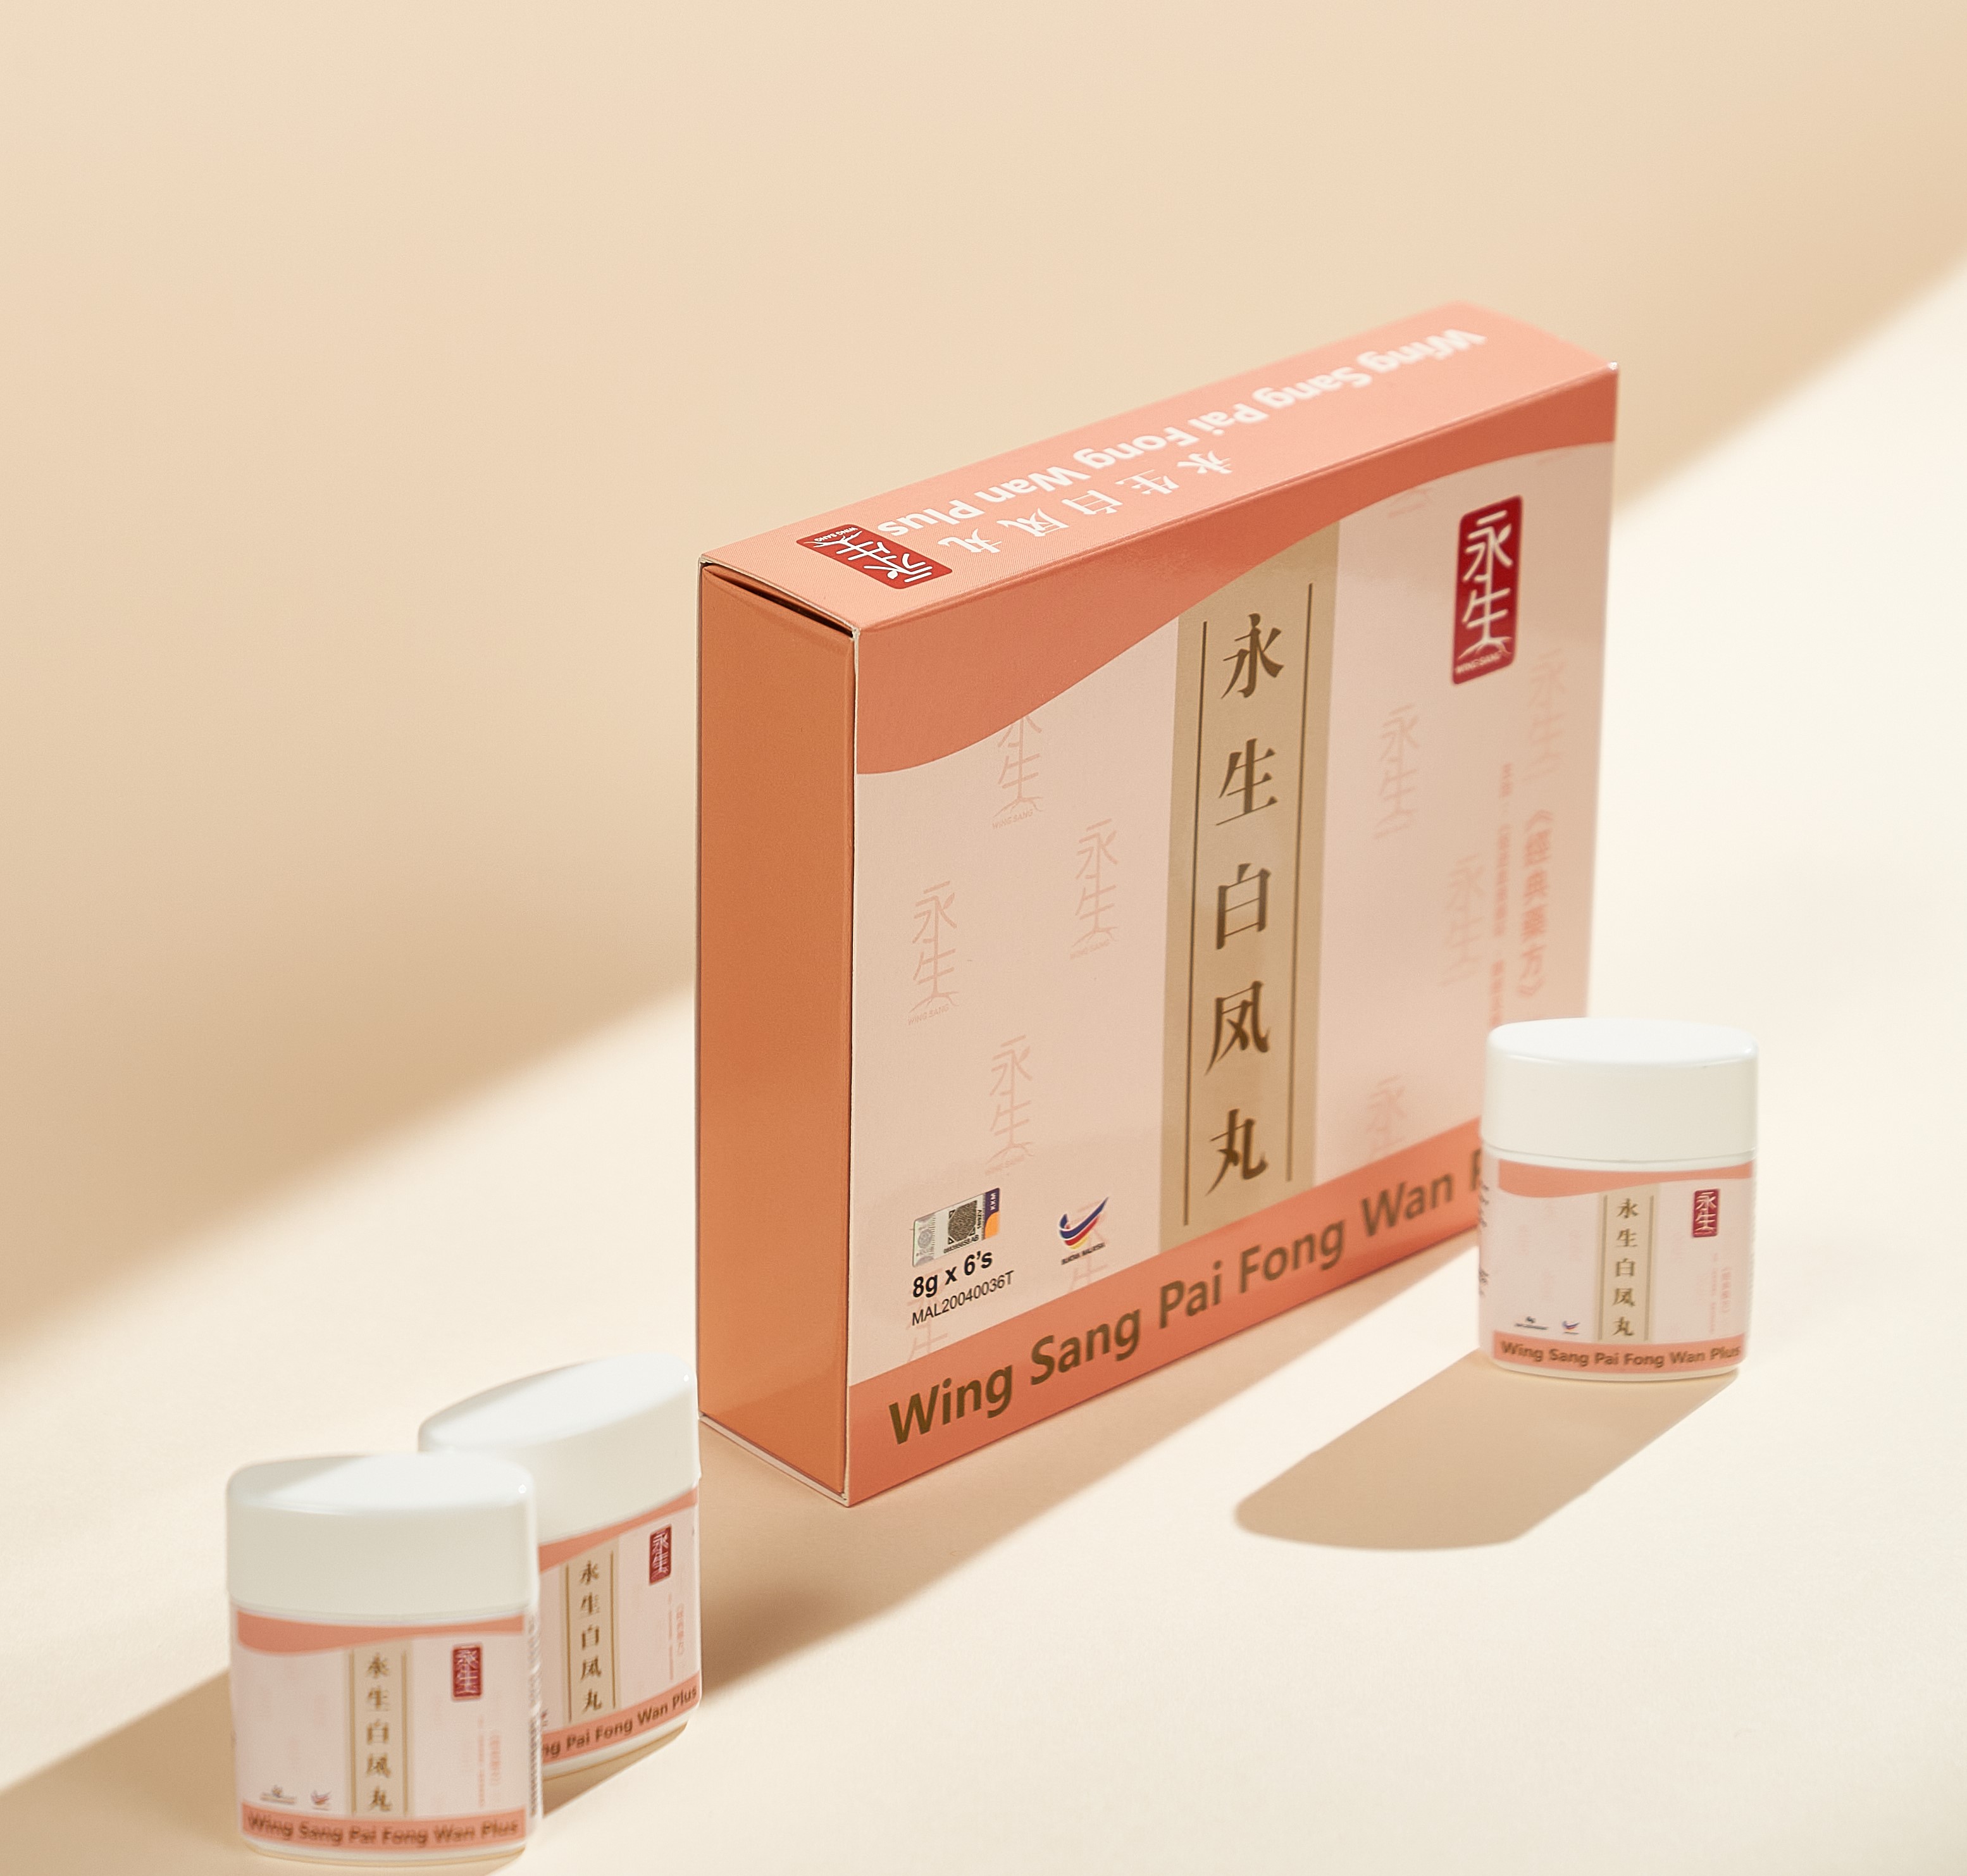 Wing Sang Pai Fong Wan Plus  &ndash; Traditional Remedy for Menstrual Cycle